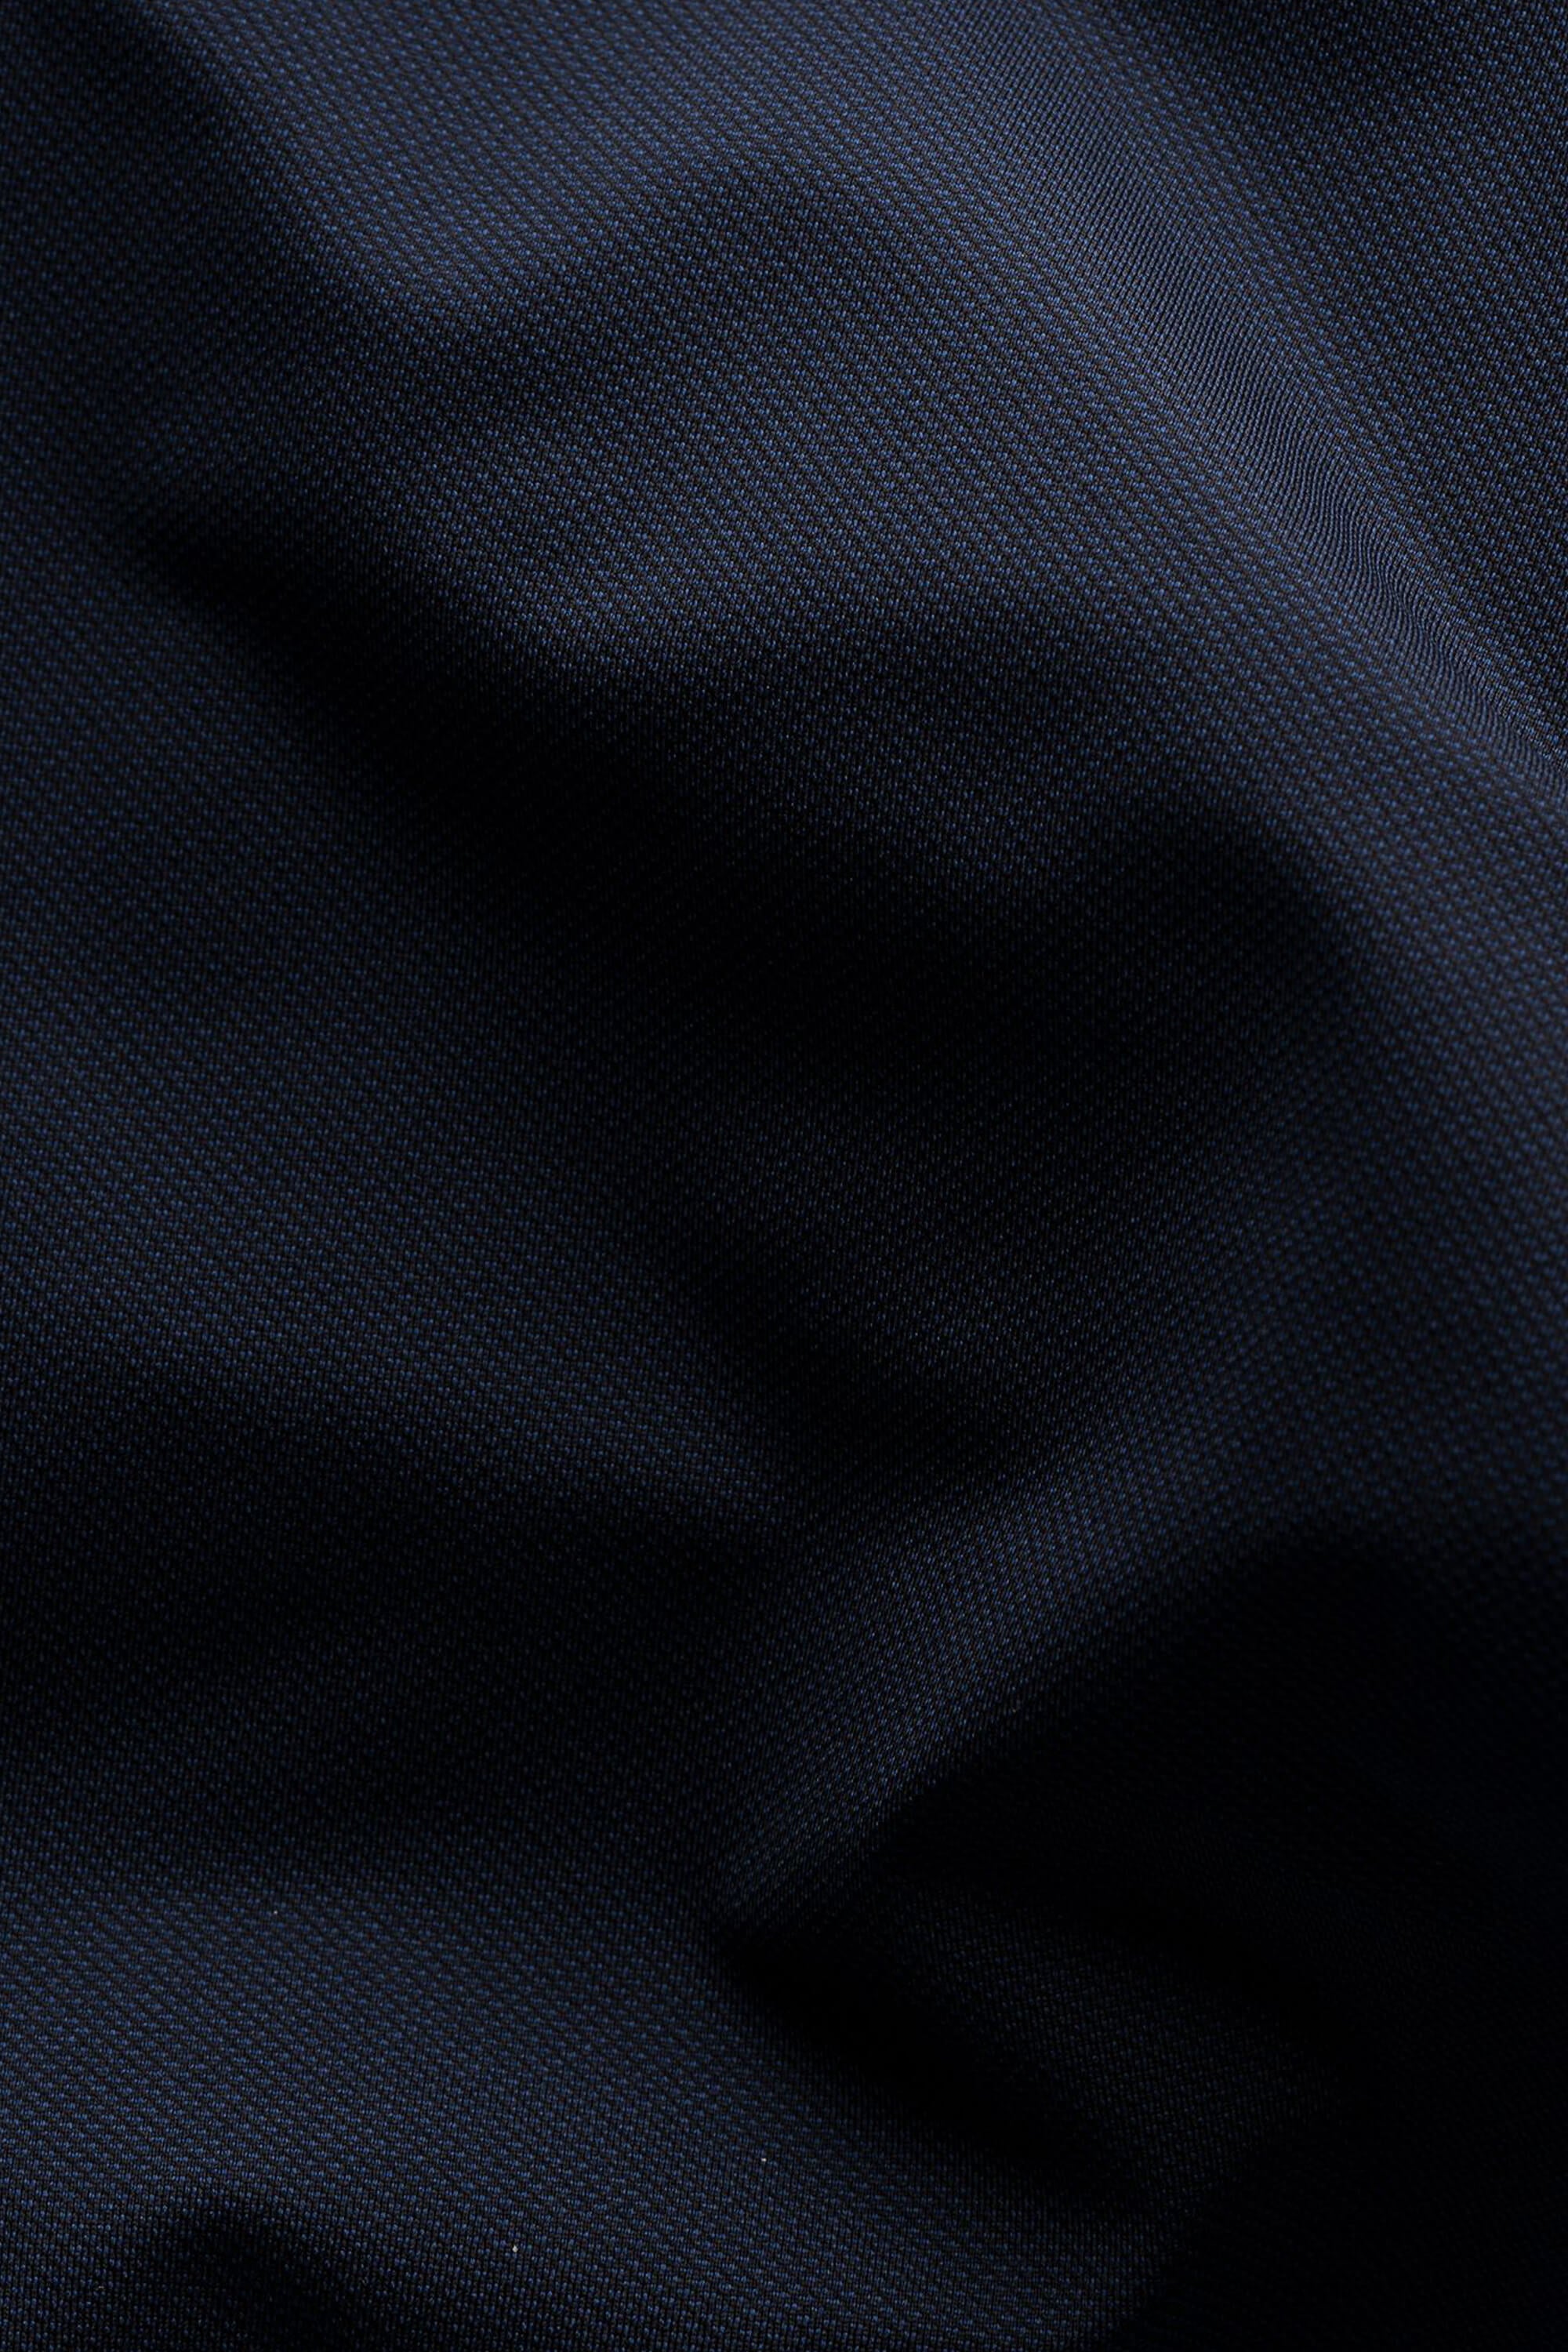 Eton Navy Blue Four-Way Stretch Shirt